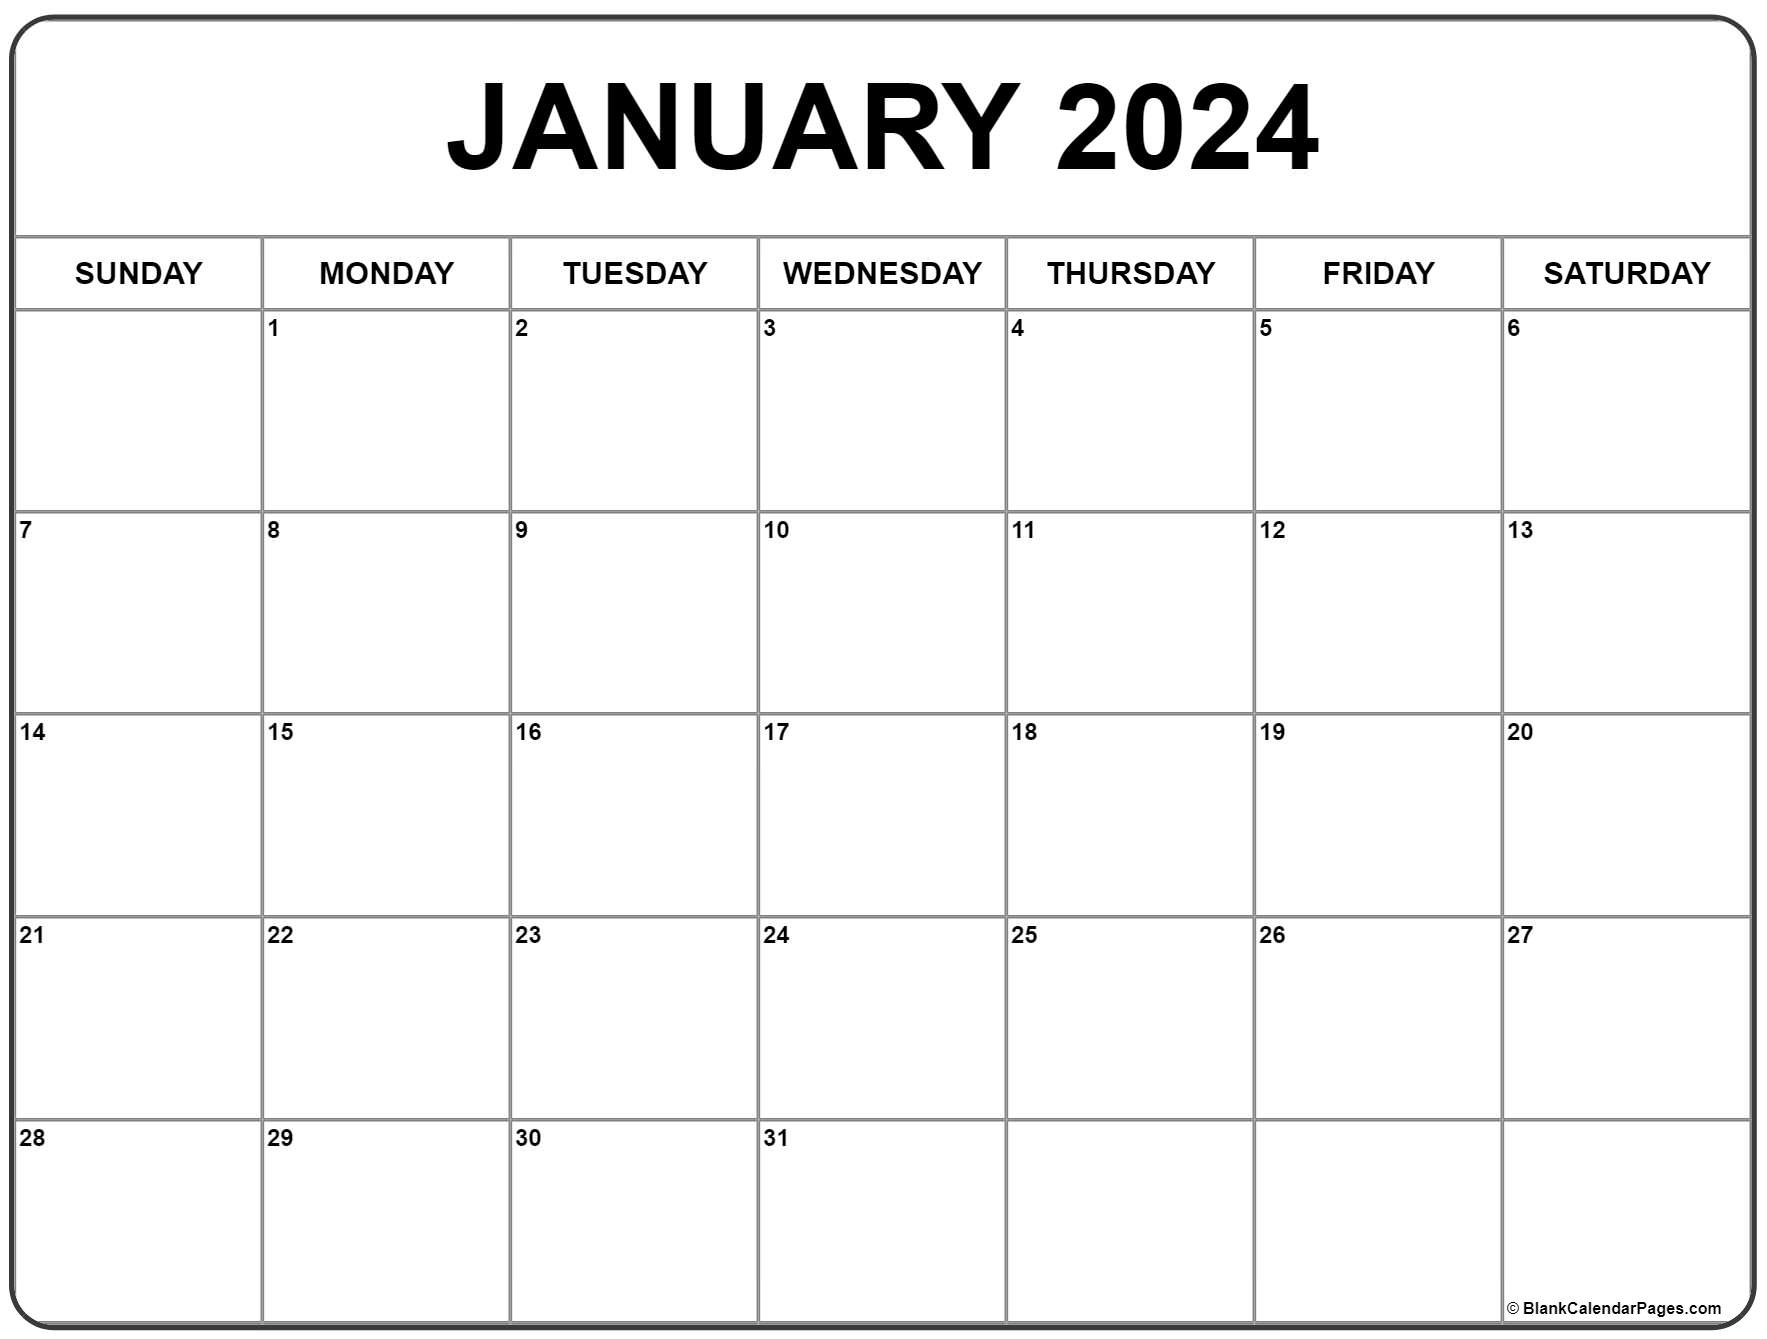 January 2024 Calendar | Free Printable Calendar for Free January Printable Calendar 2024